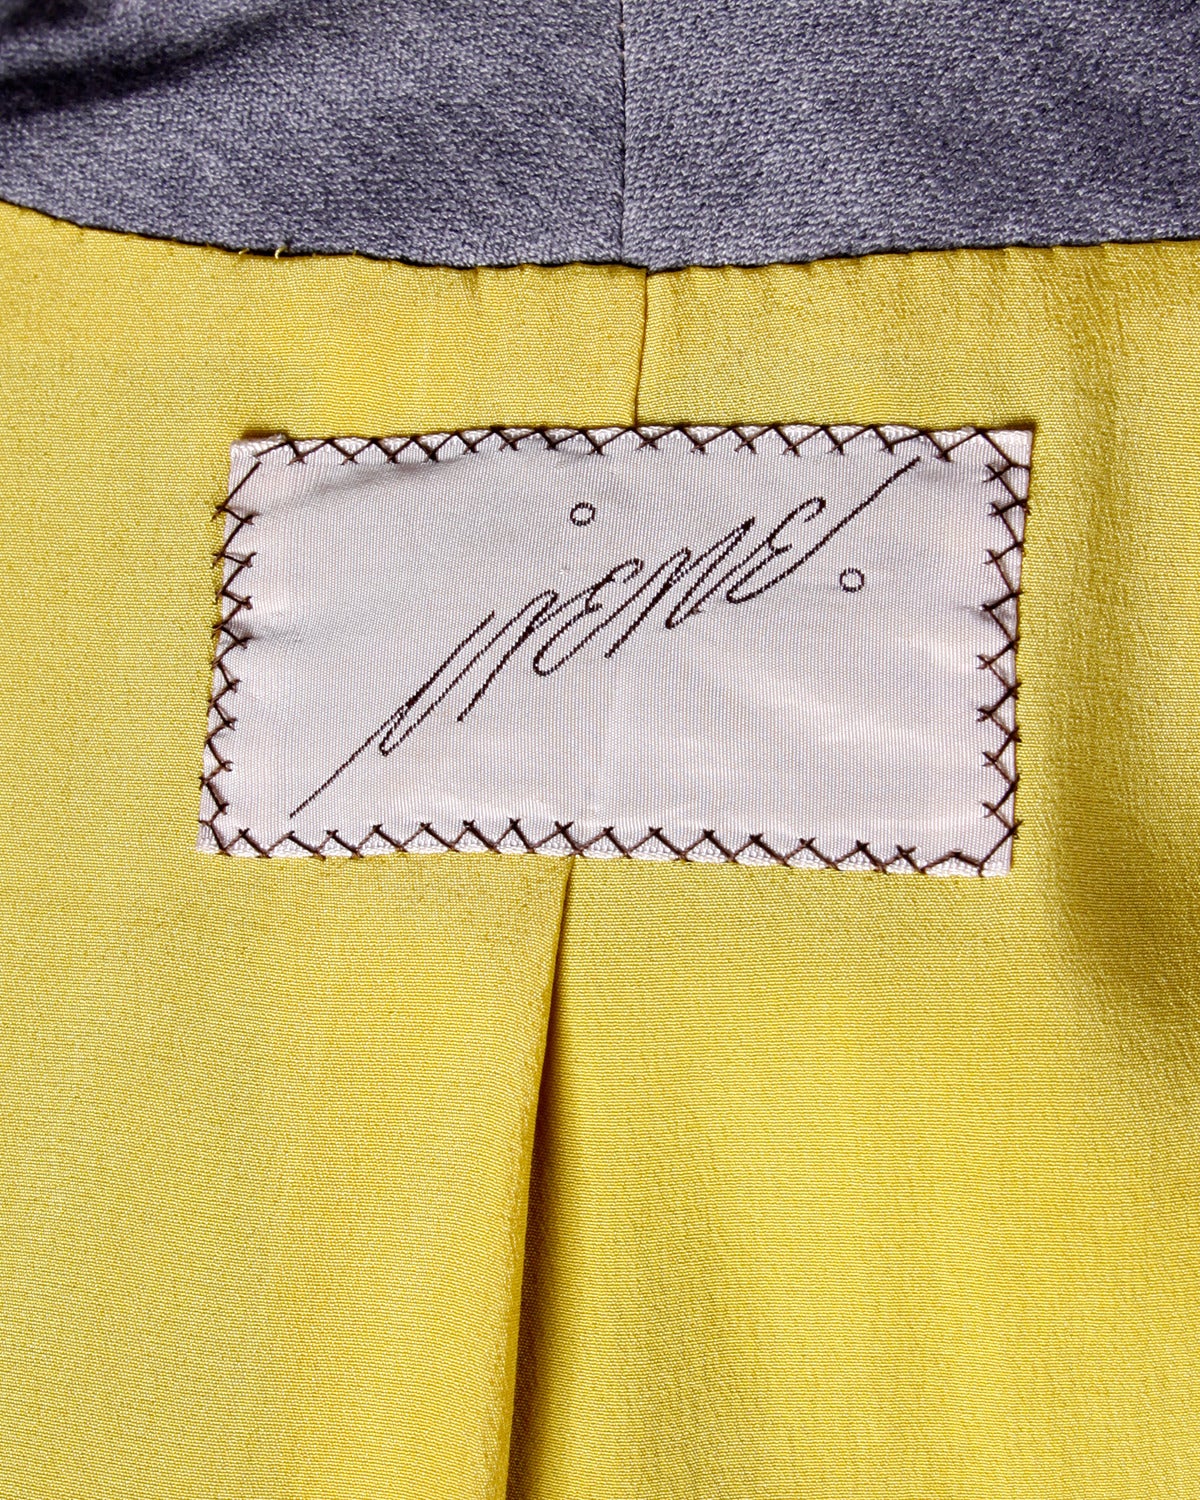 Spectacular Irene Lentz Vintage 1940s 40s Gray Wool Blazer Jacket For Sale 1